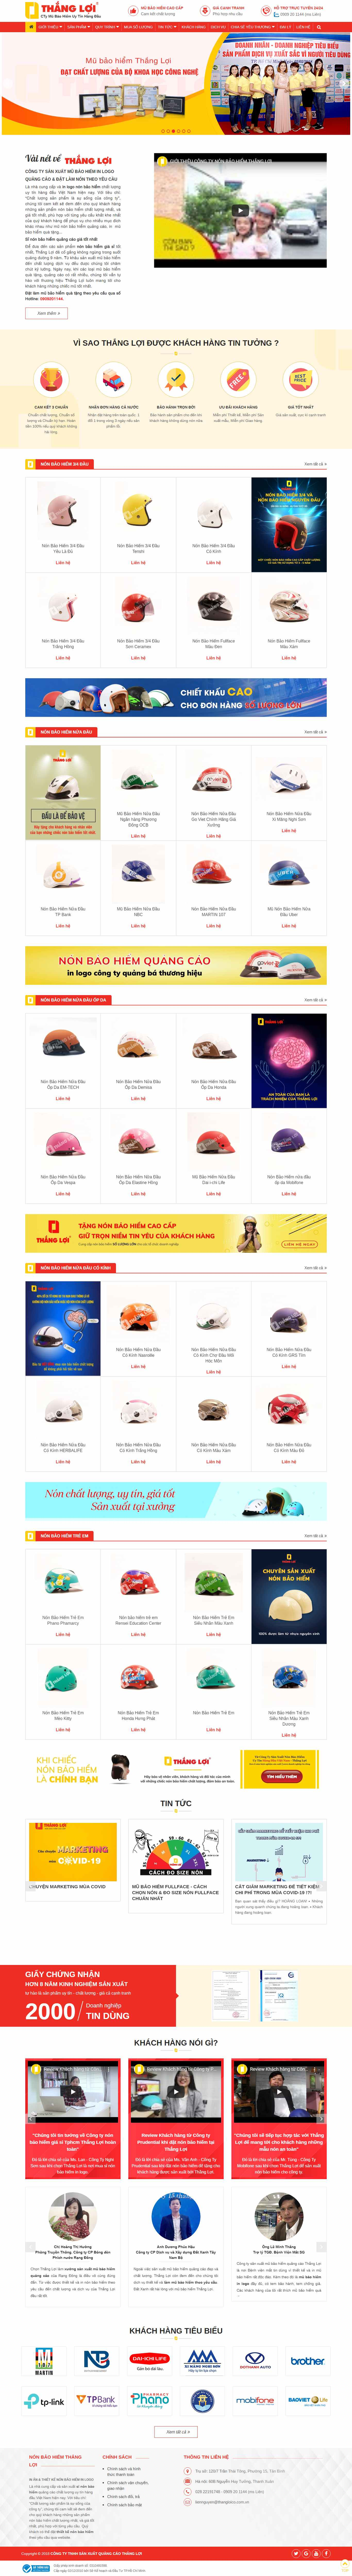 Thiết kế Website mũ bảo hiểm - nonbaohiemthangloi.com.vn